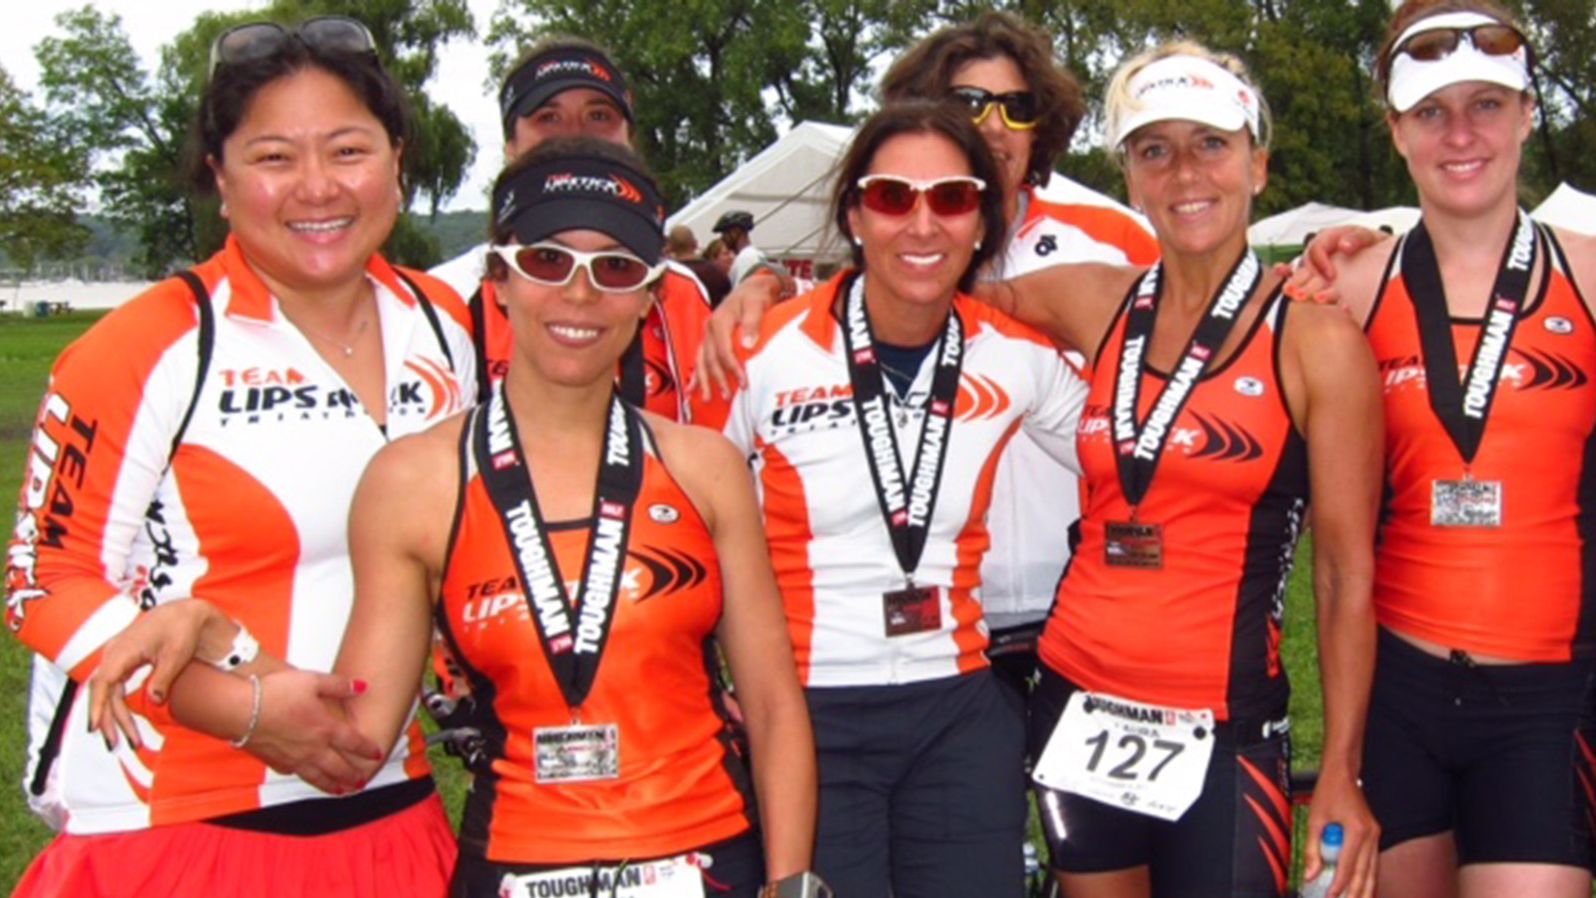 Team Lipstick (author in the center) at a Toughman Triathlon.